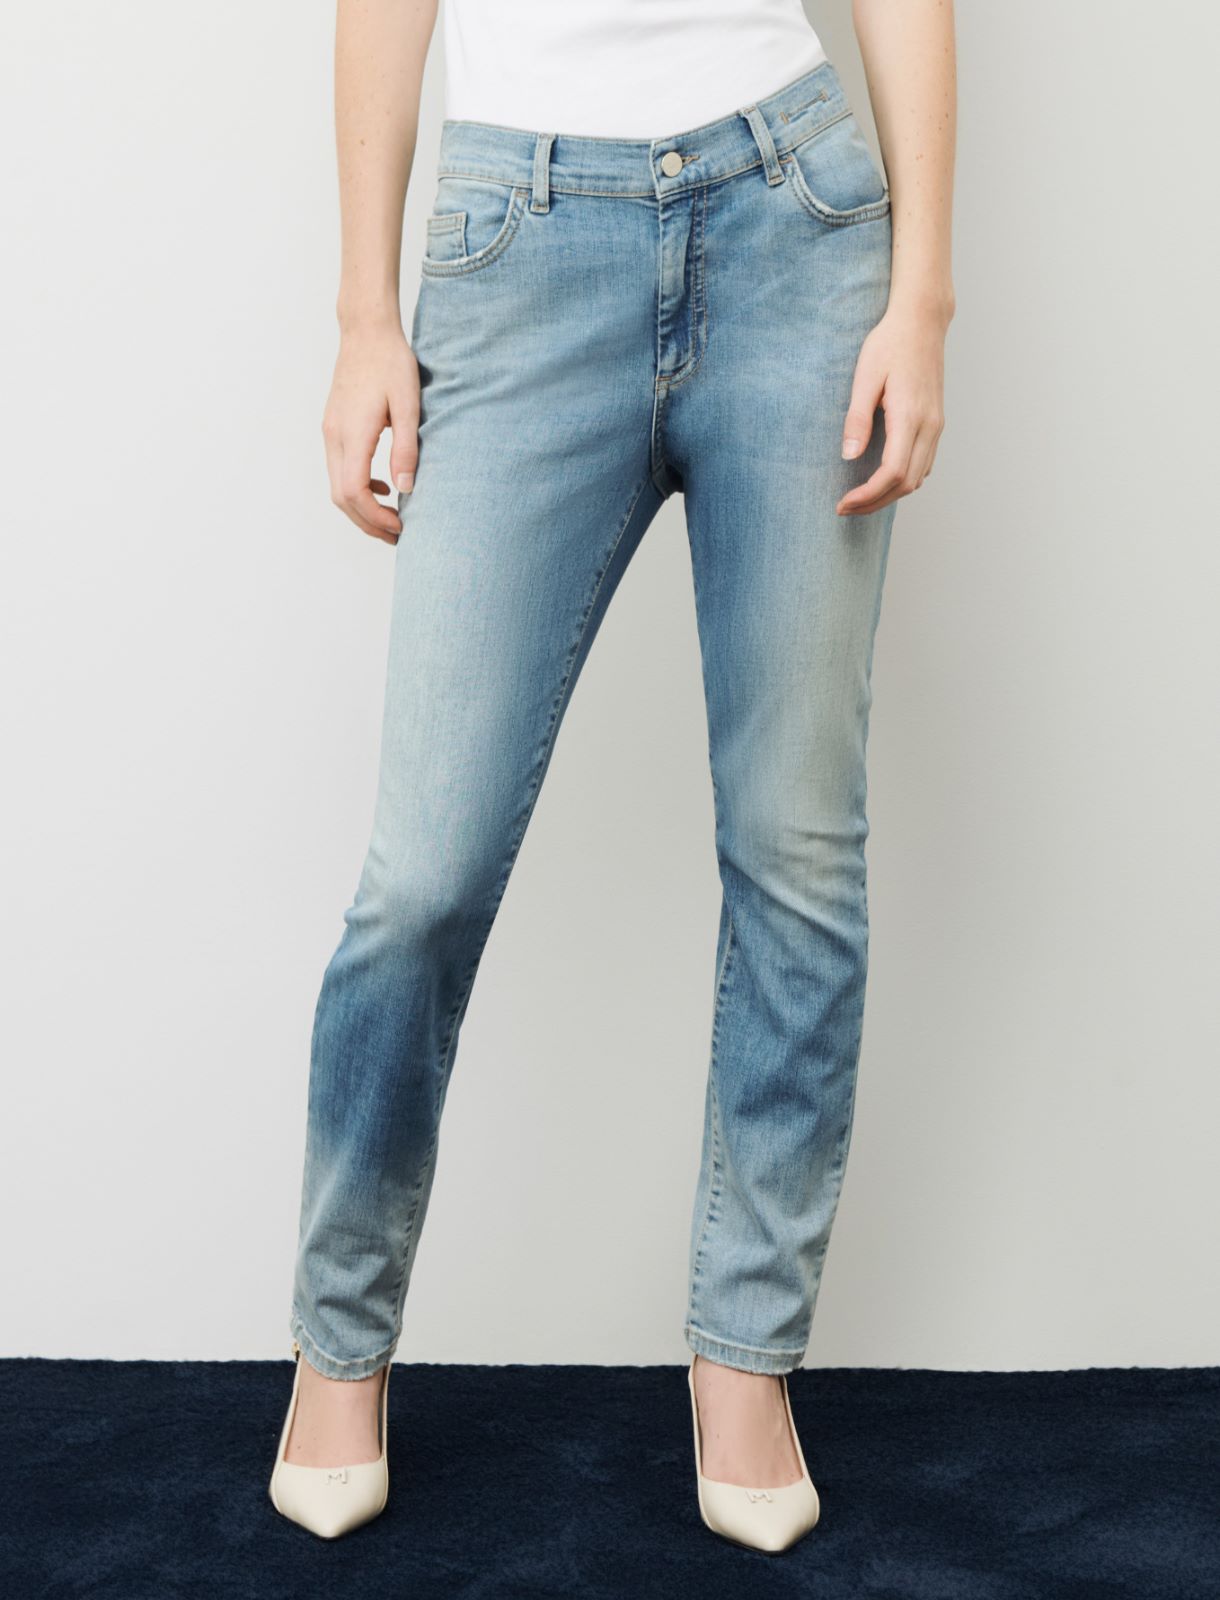 Skinny jeans - Blue jeans - Marella - 2